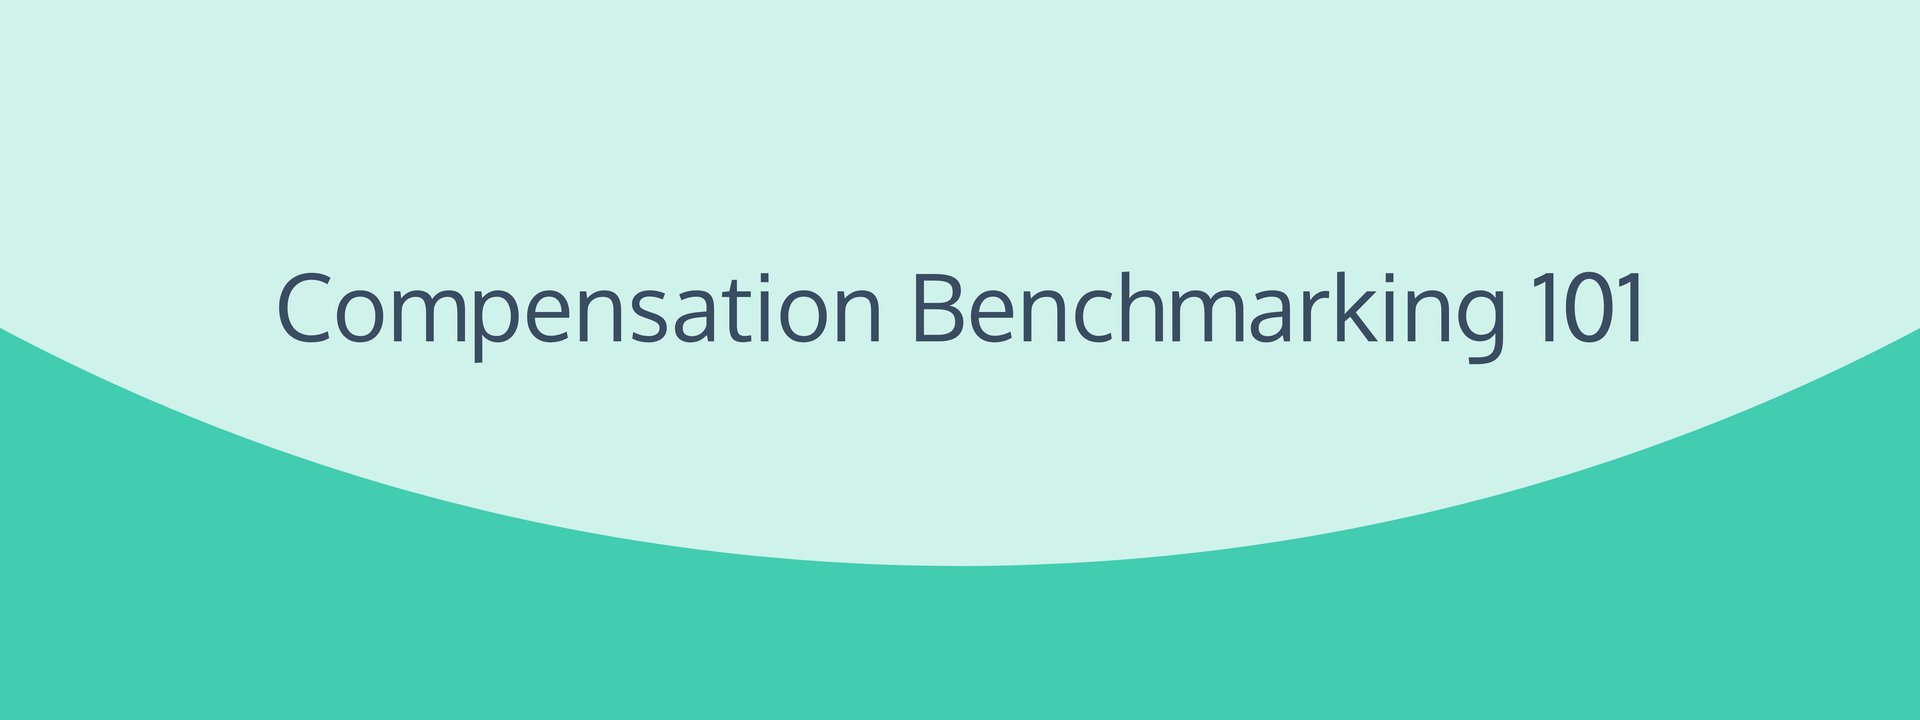 Compensation Benchmarking 101